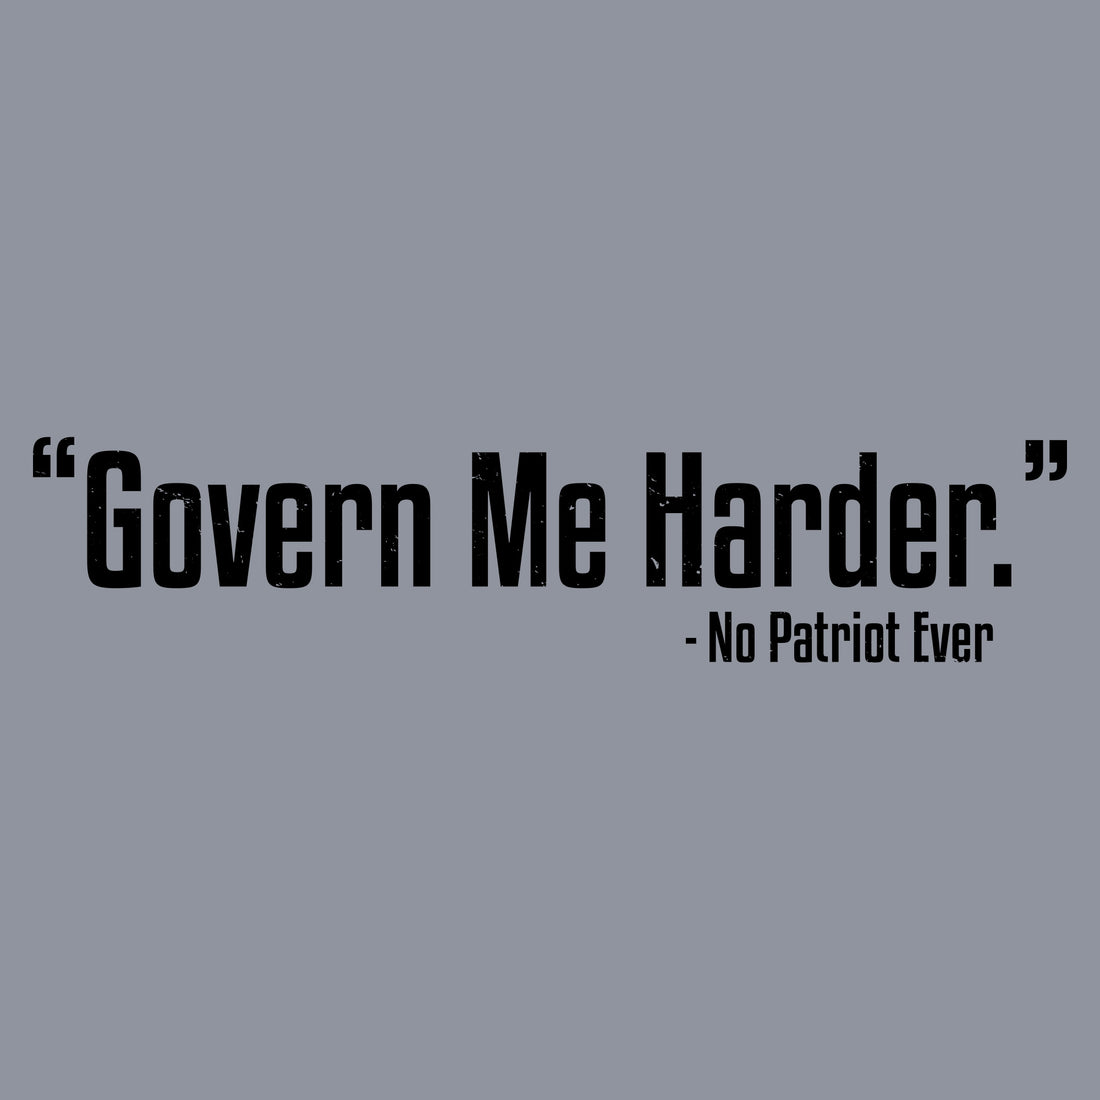 Govern Me Harder T-Shirt - Dark Heather Gray